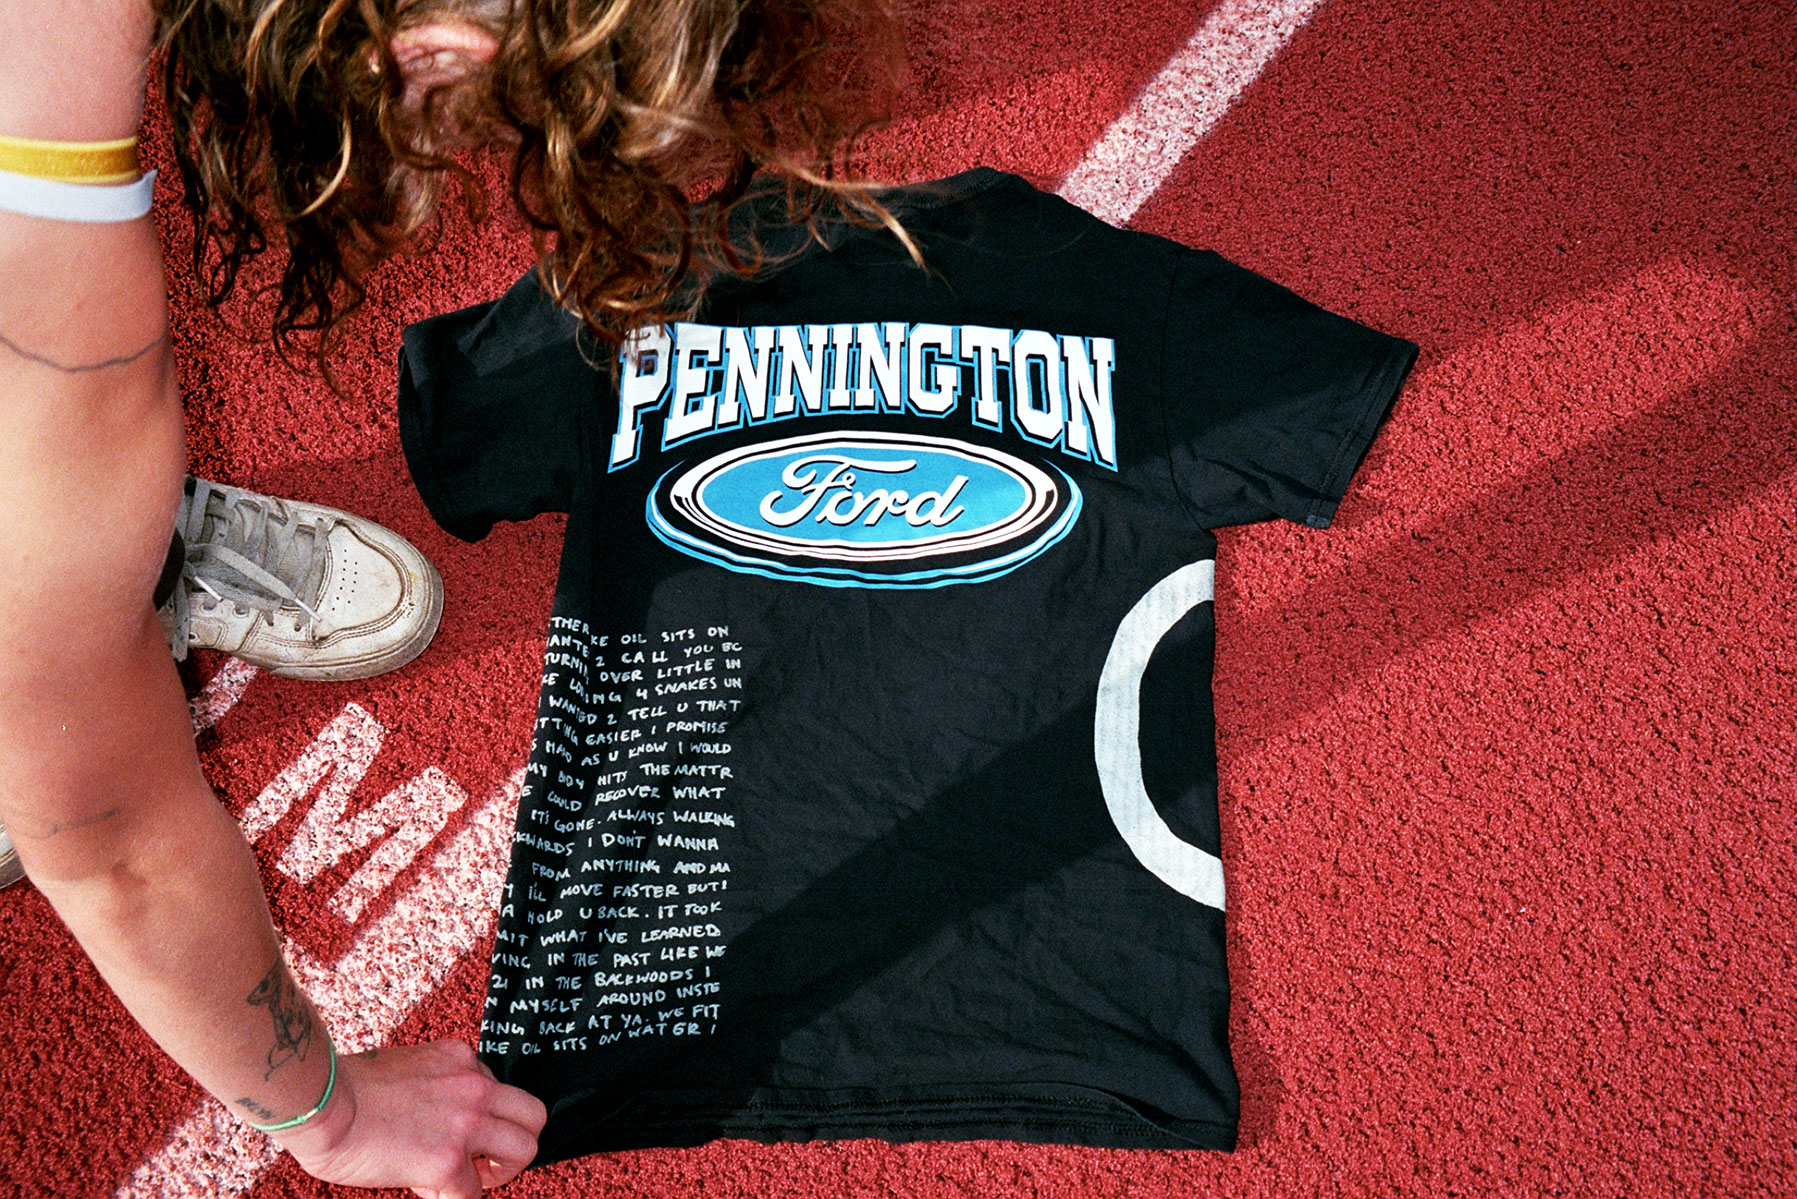 1-of-1 pennington ford oil shirt